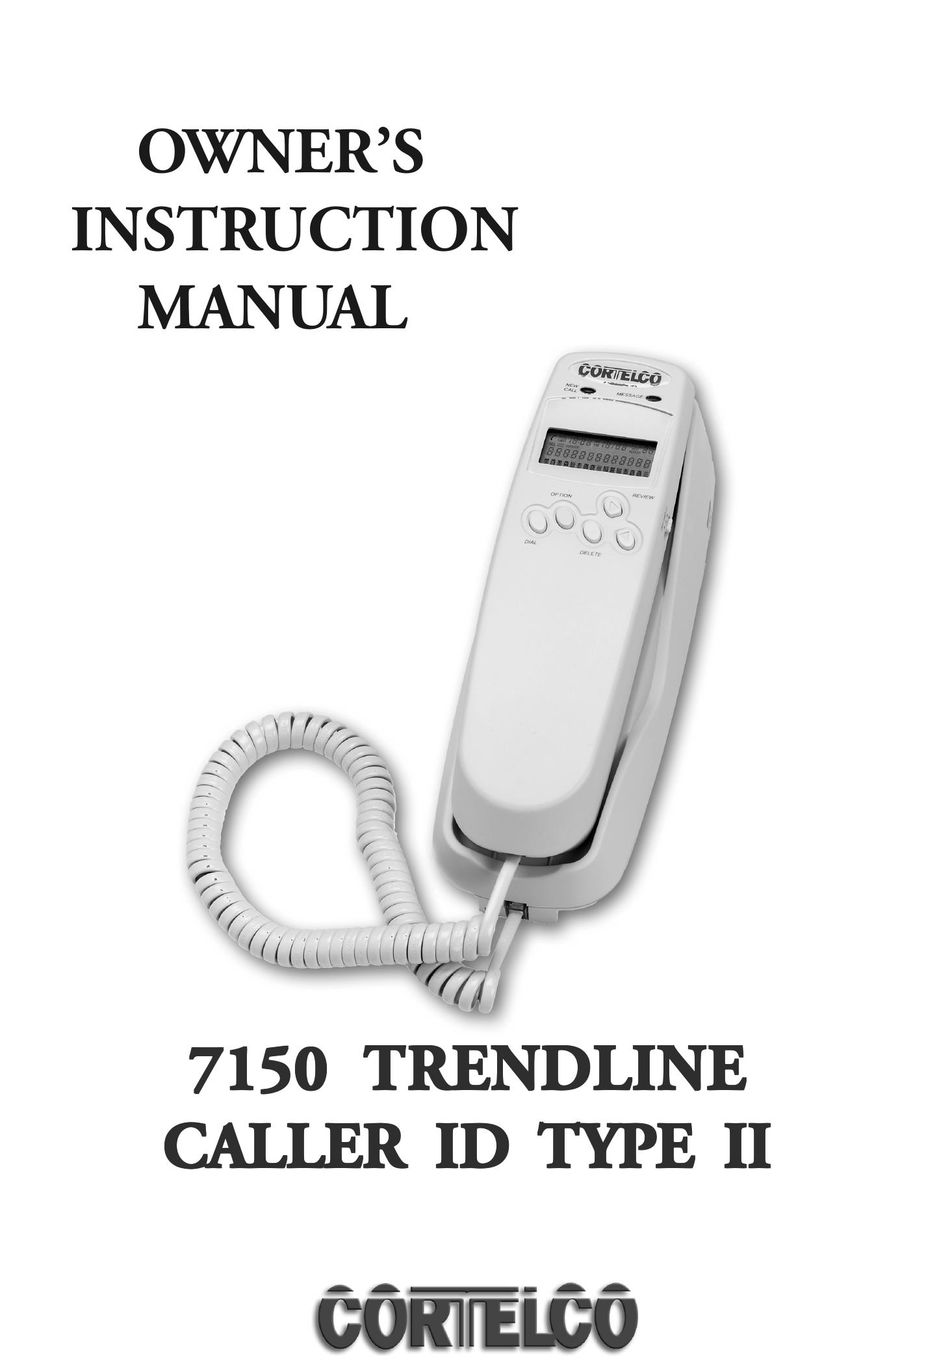 Cortelco 7150 Telephone User Manual